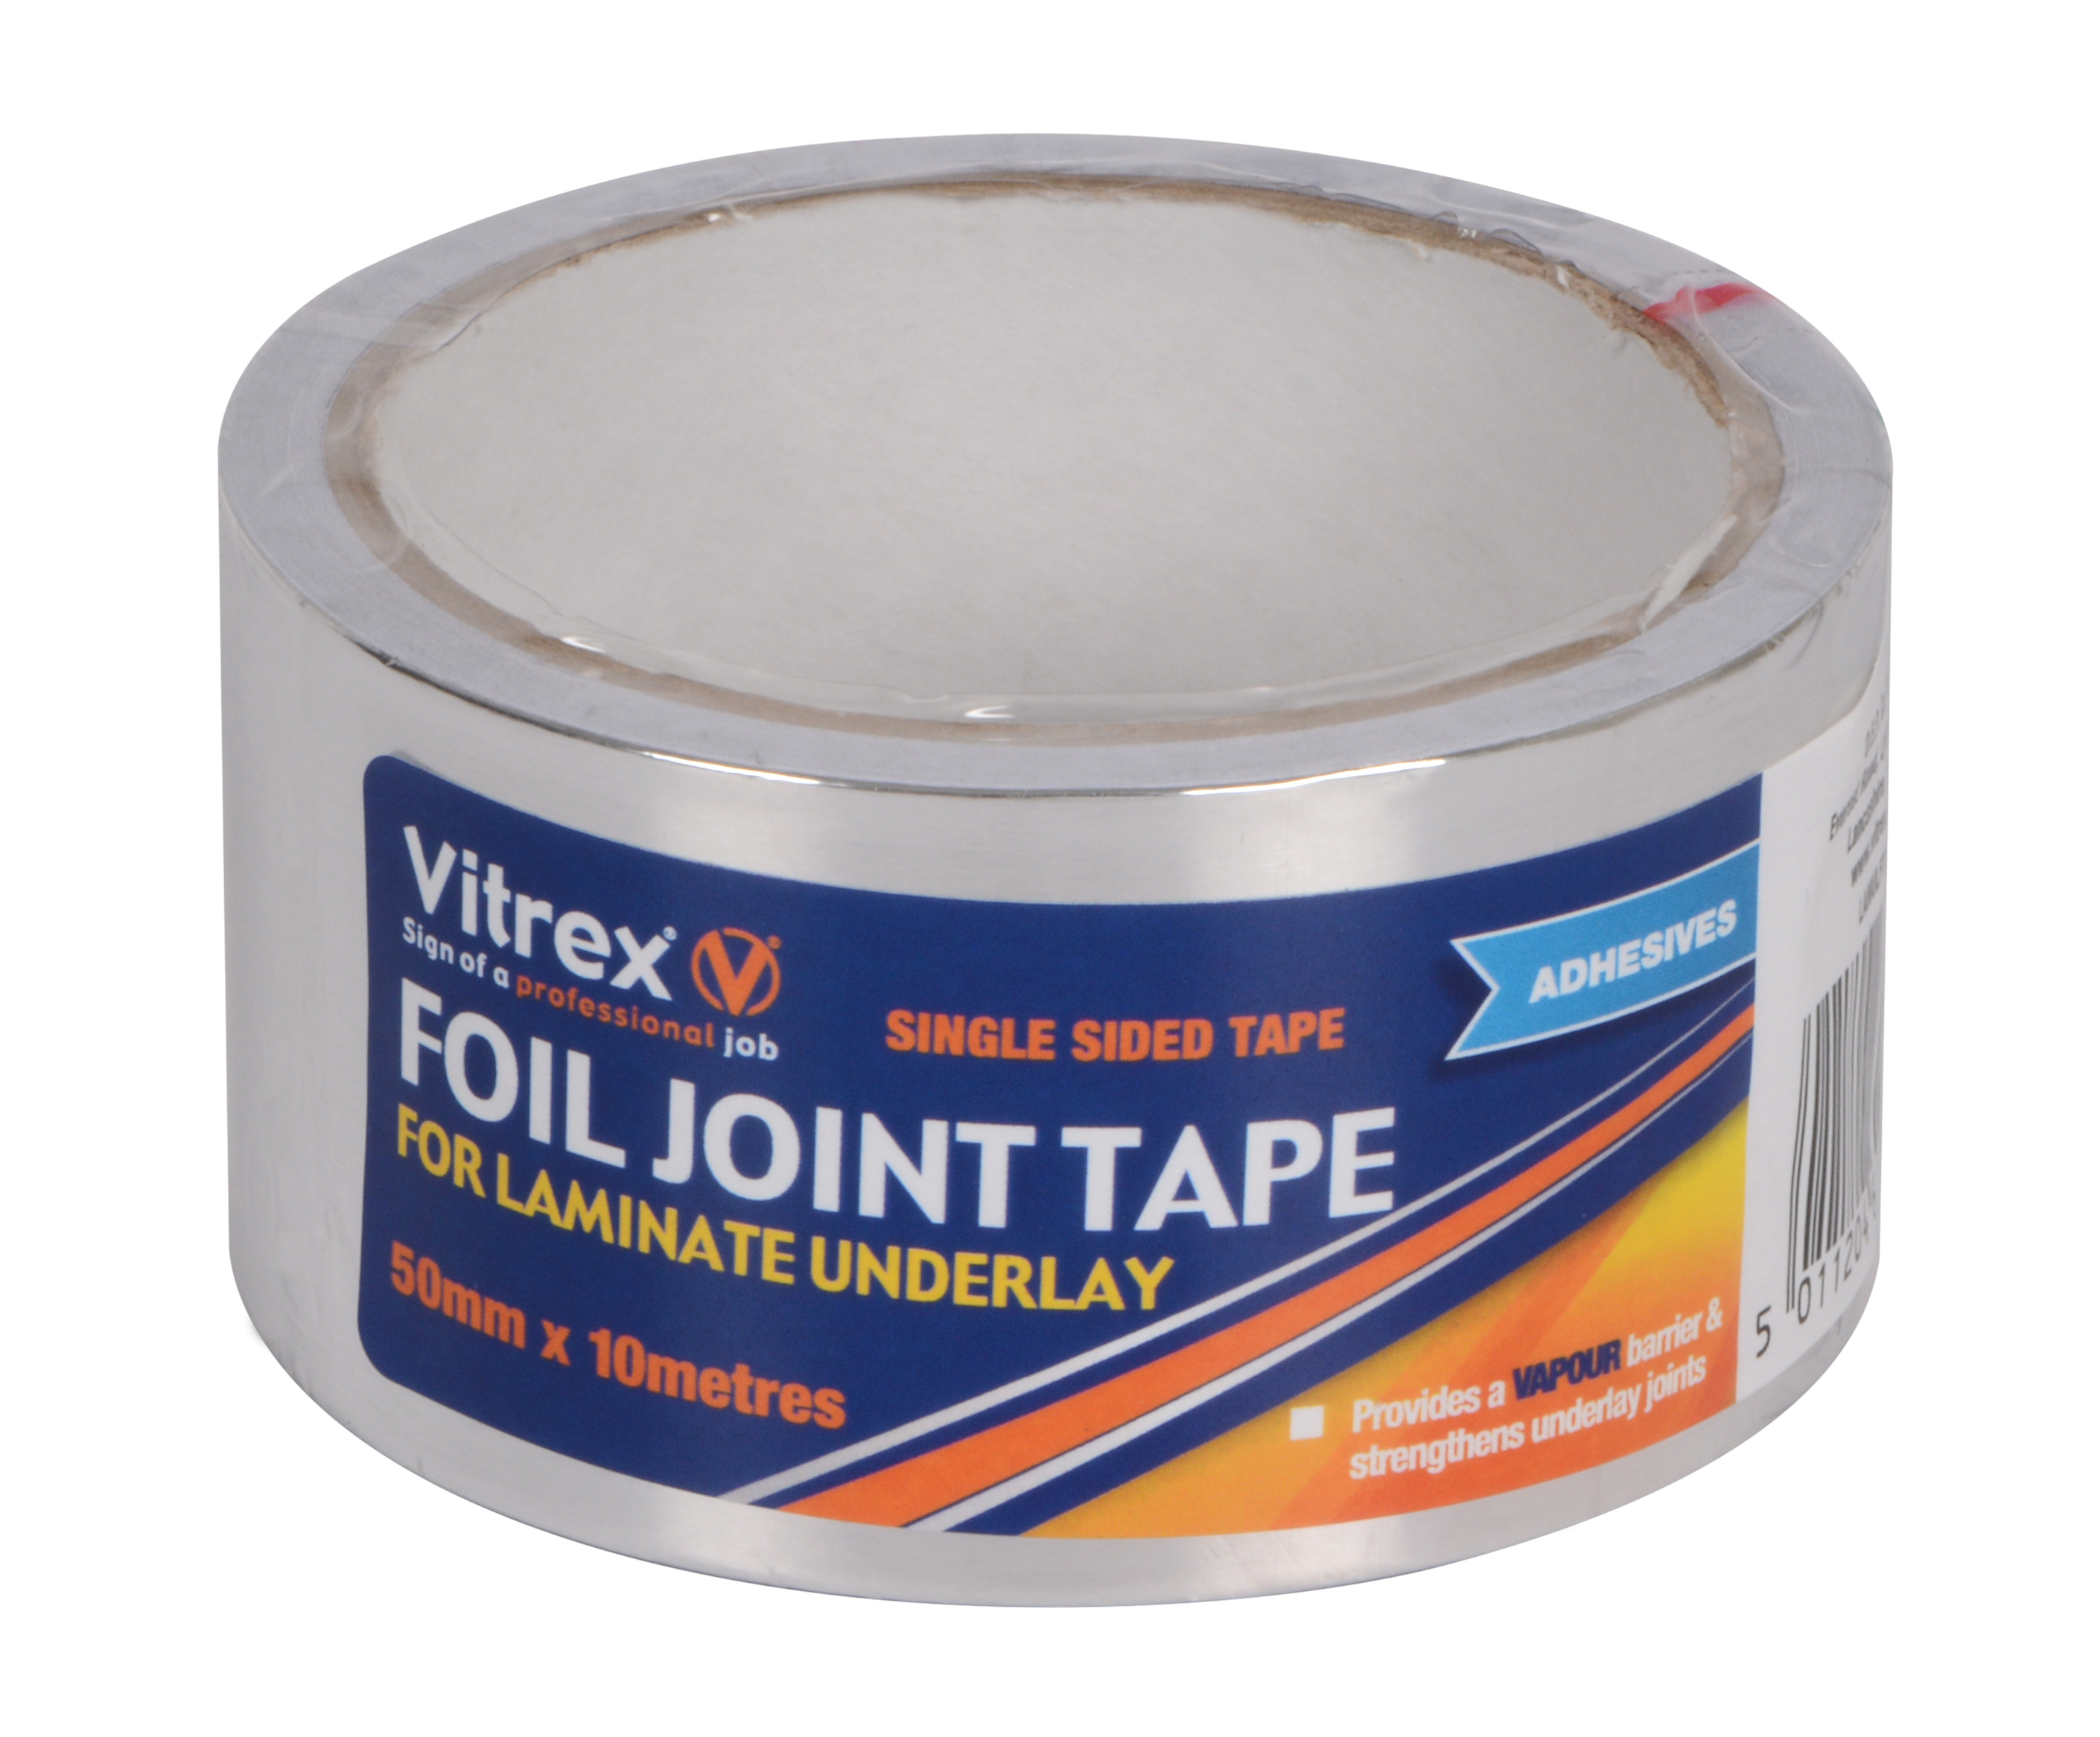 Foil Joint Tape 50mm x 10m